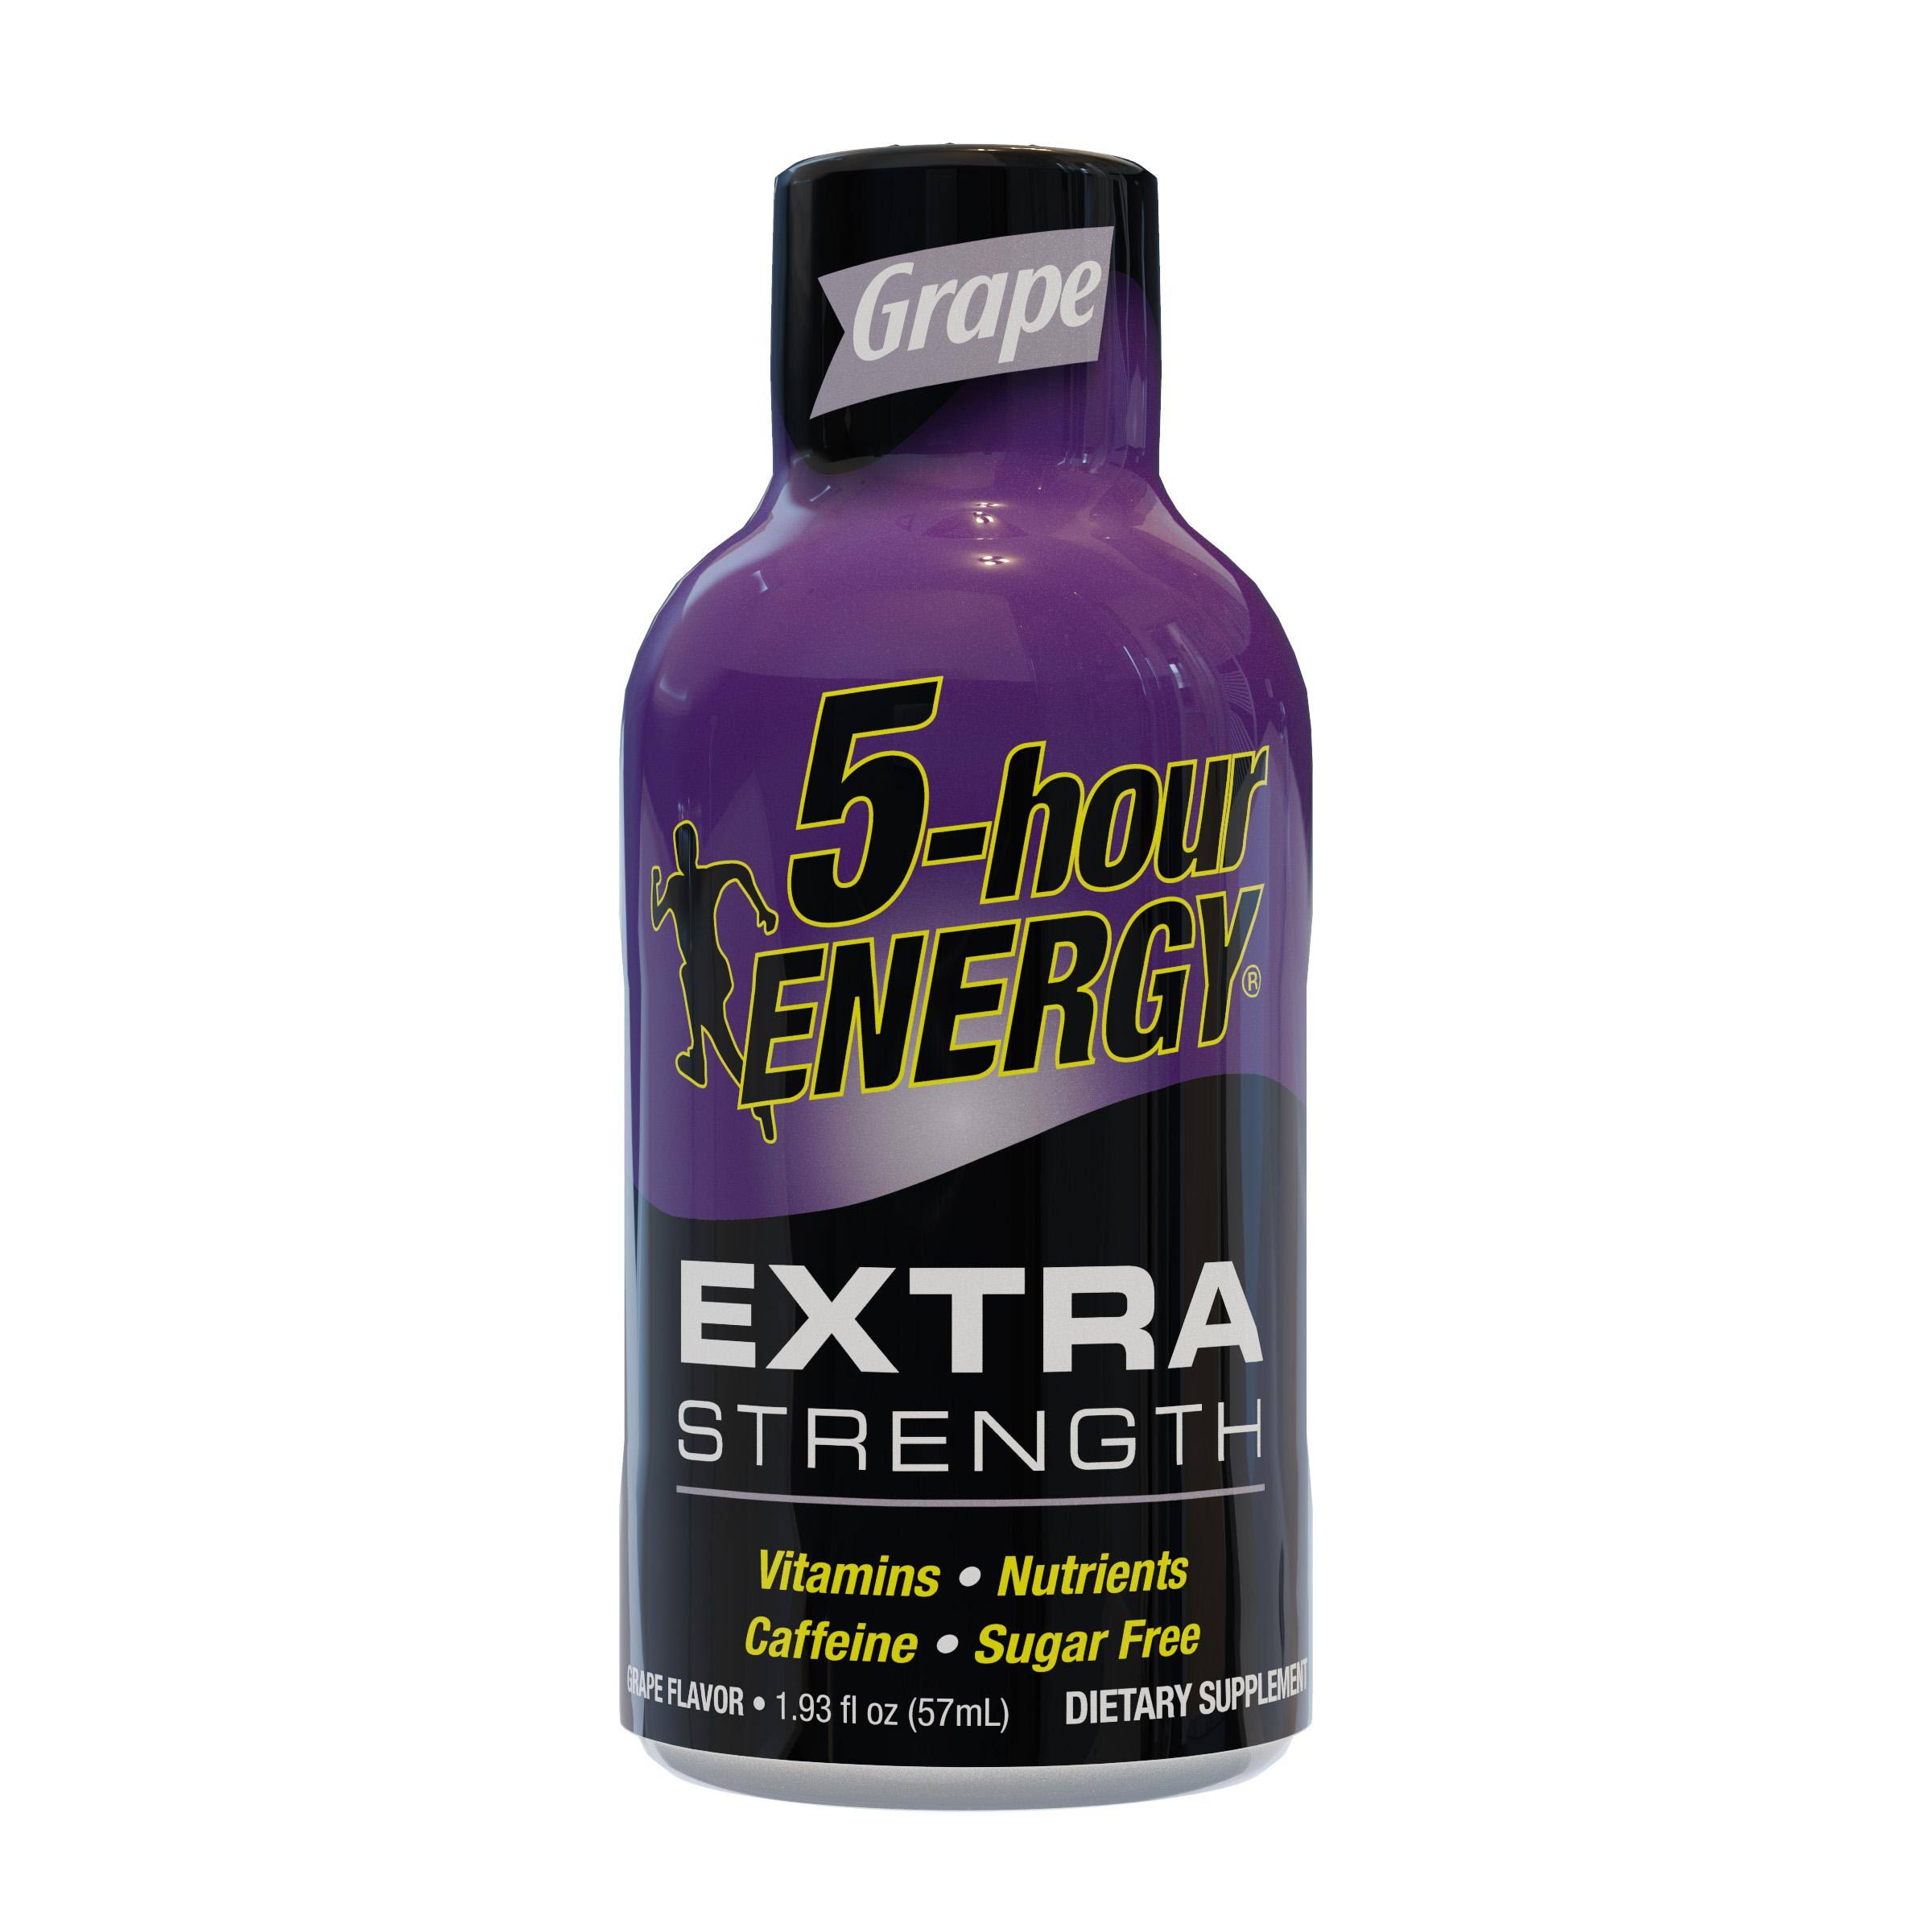 5-Hour Energy Extra Strength Energy Drink - Grape, 57ml